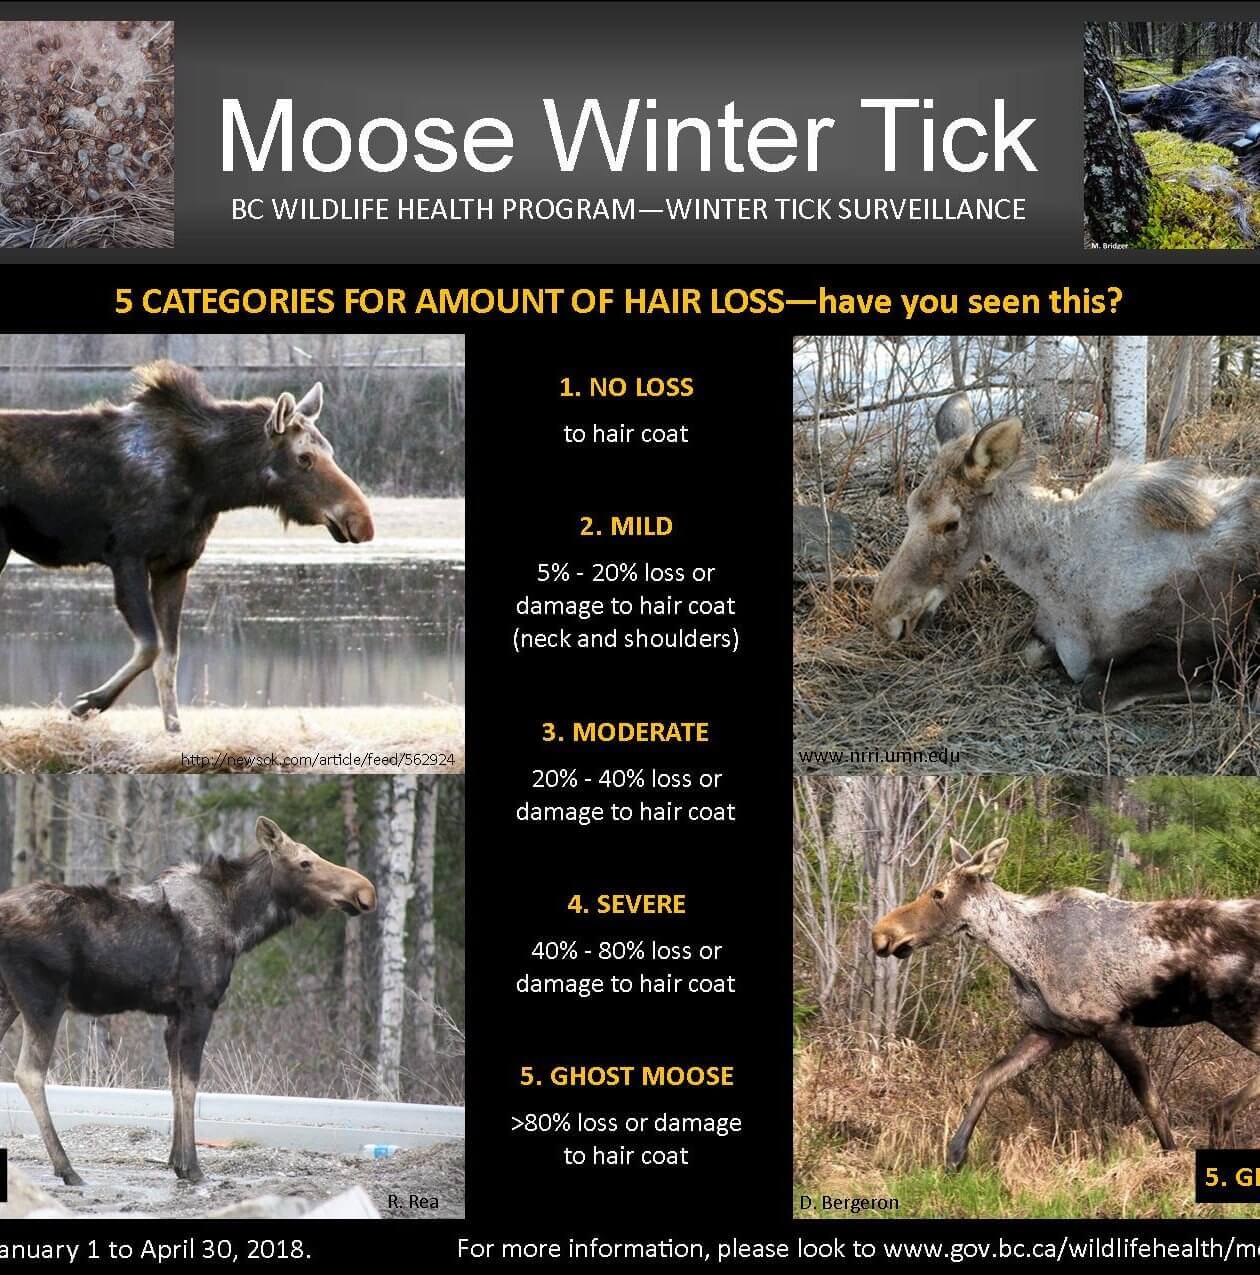 Moose Winter Tick Surveillance – Survey